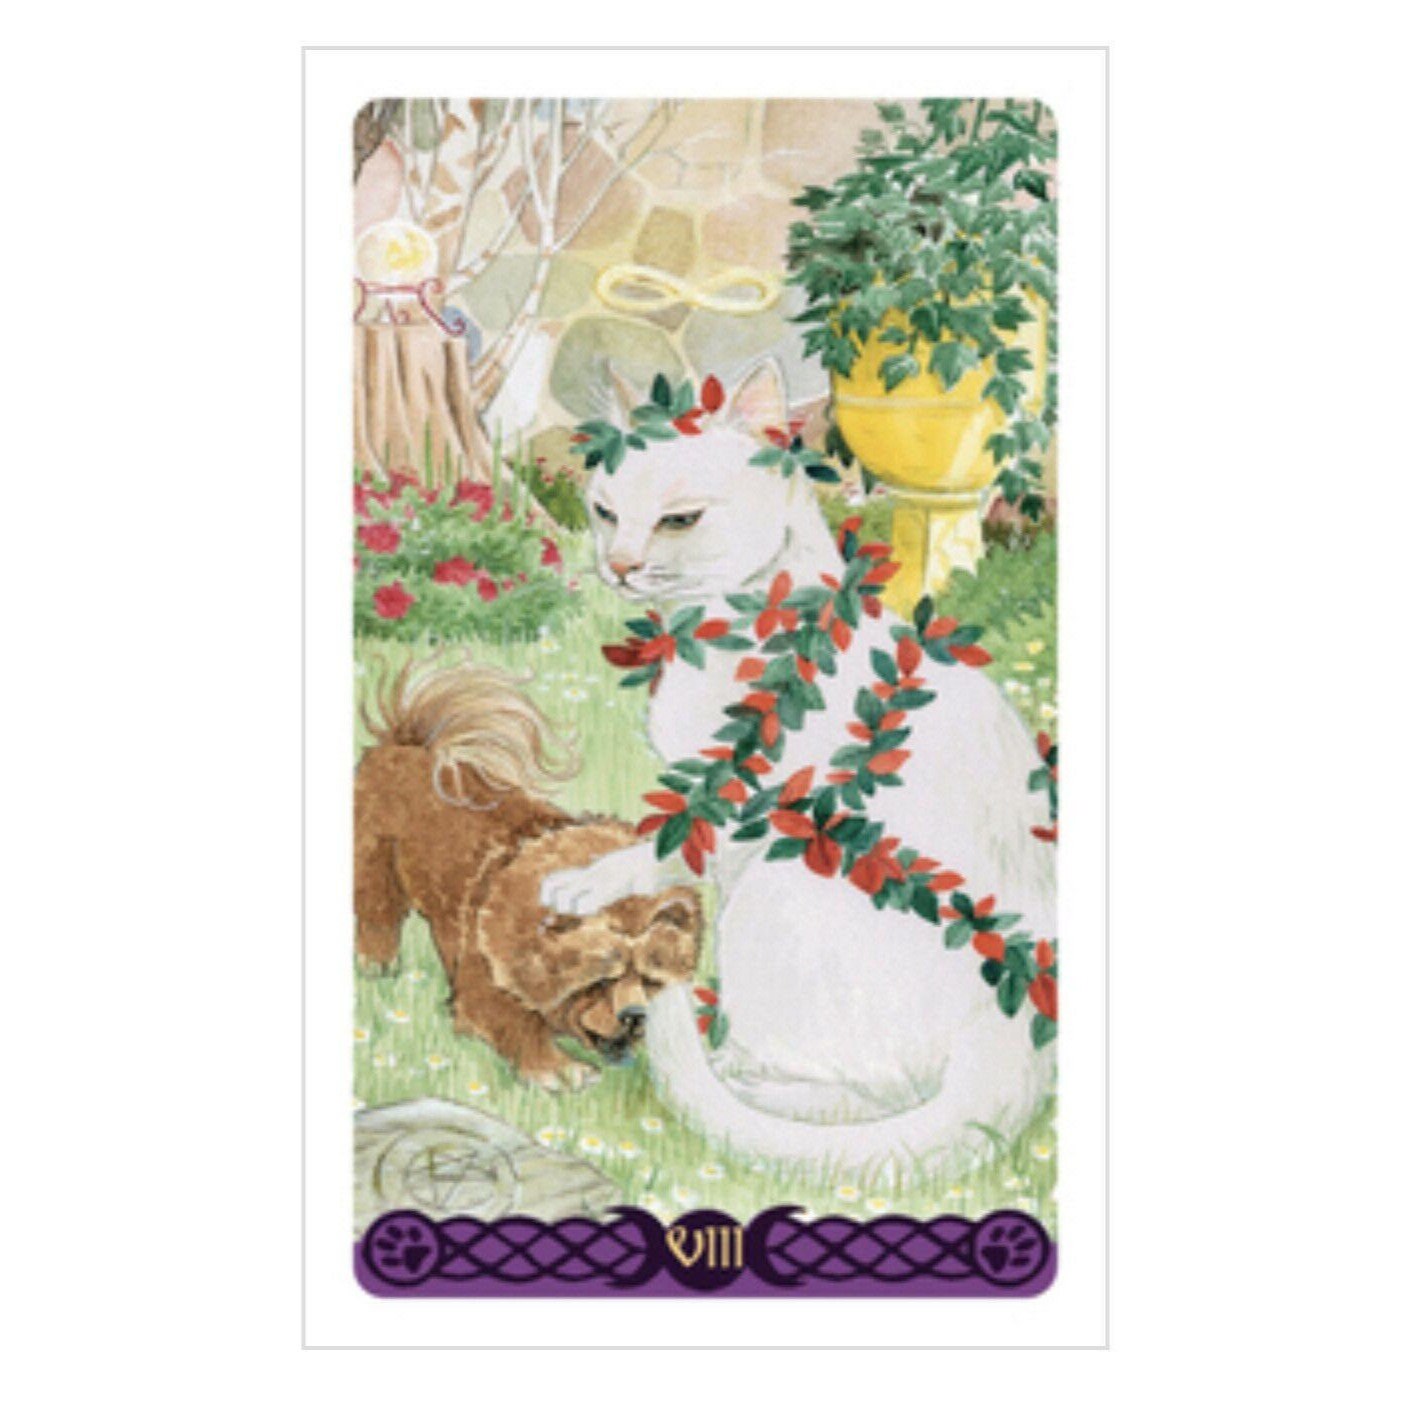 Tarot of Pagan Cats Mini Deck